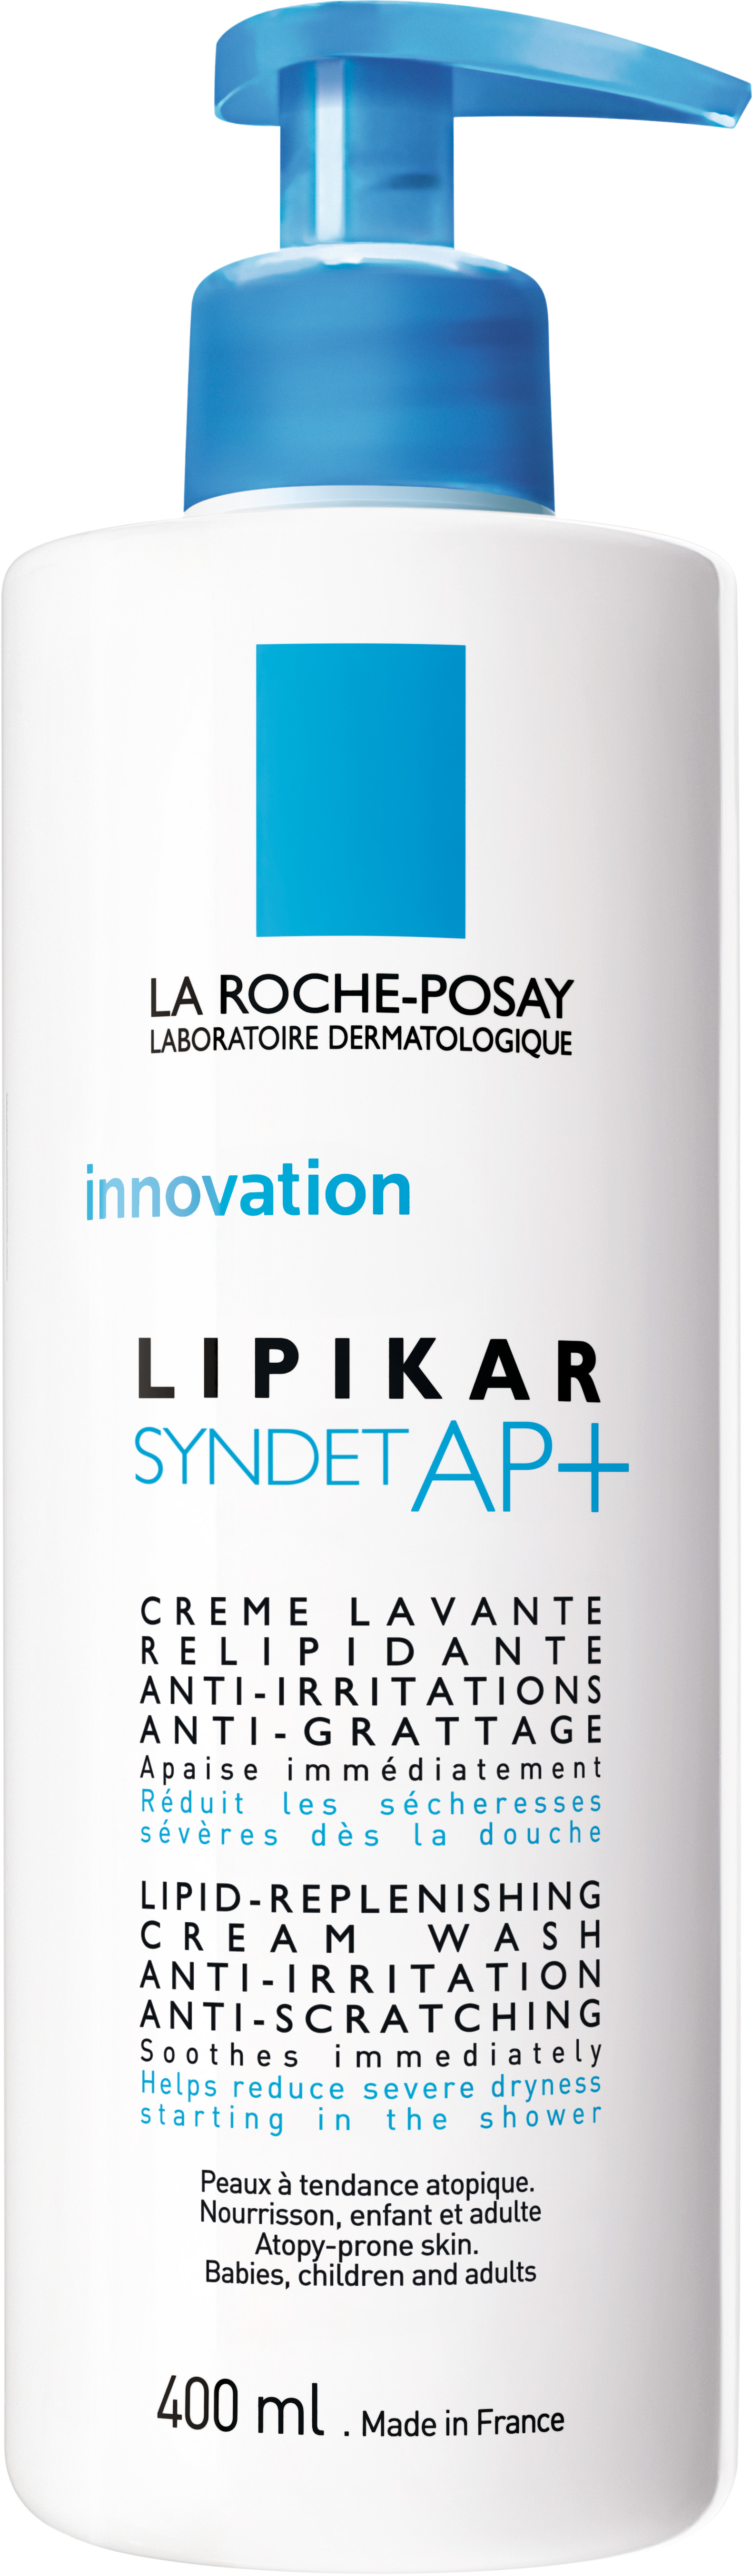 La Roche-Posay Lipikar Syndet AP+ duschgelécreme 400 ml